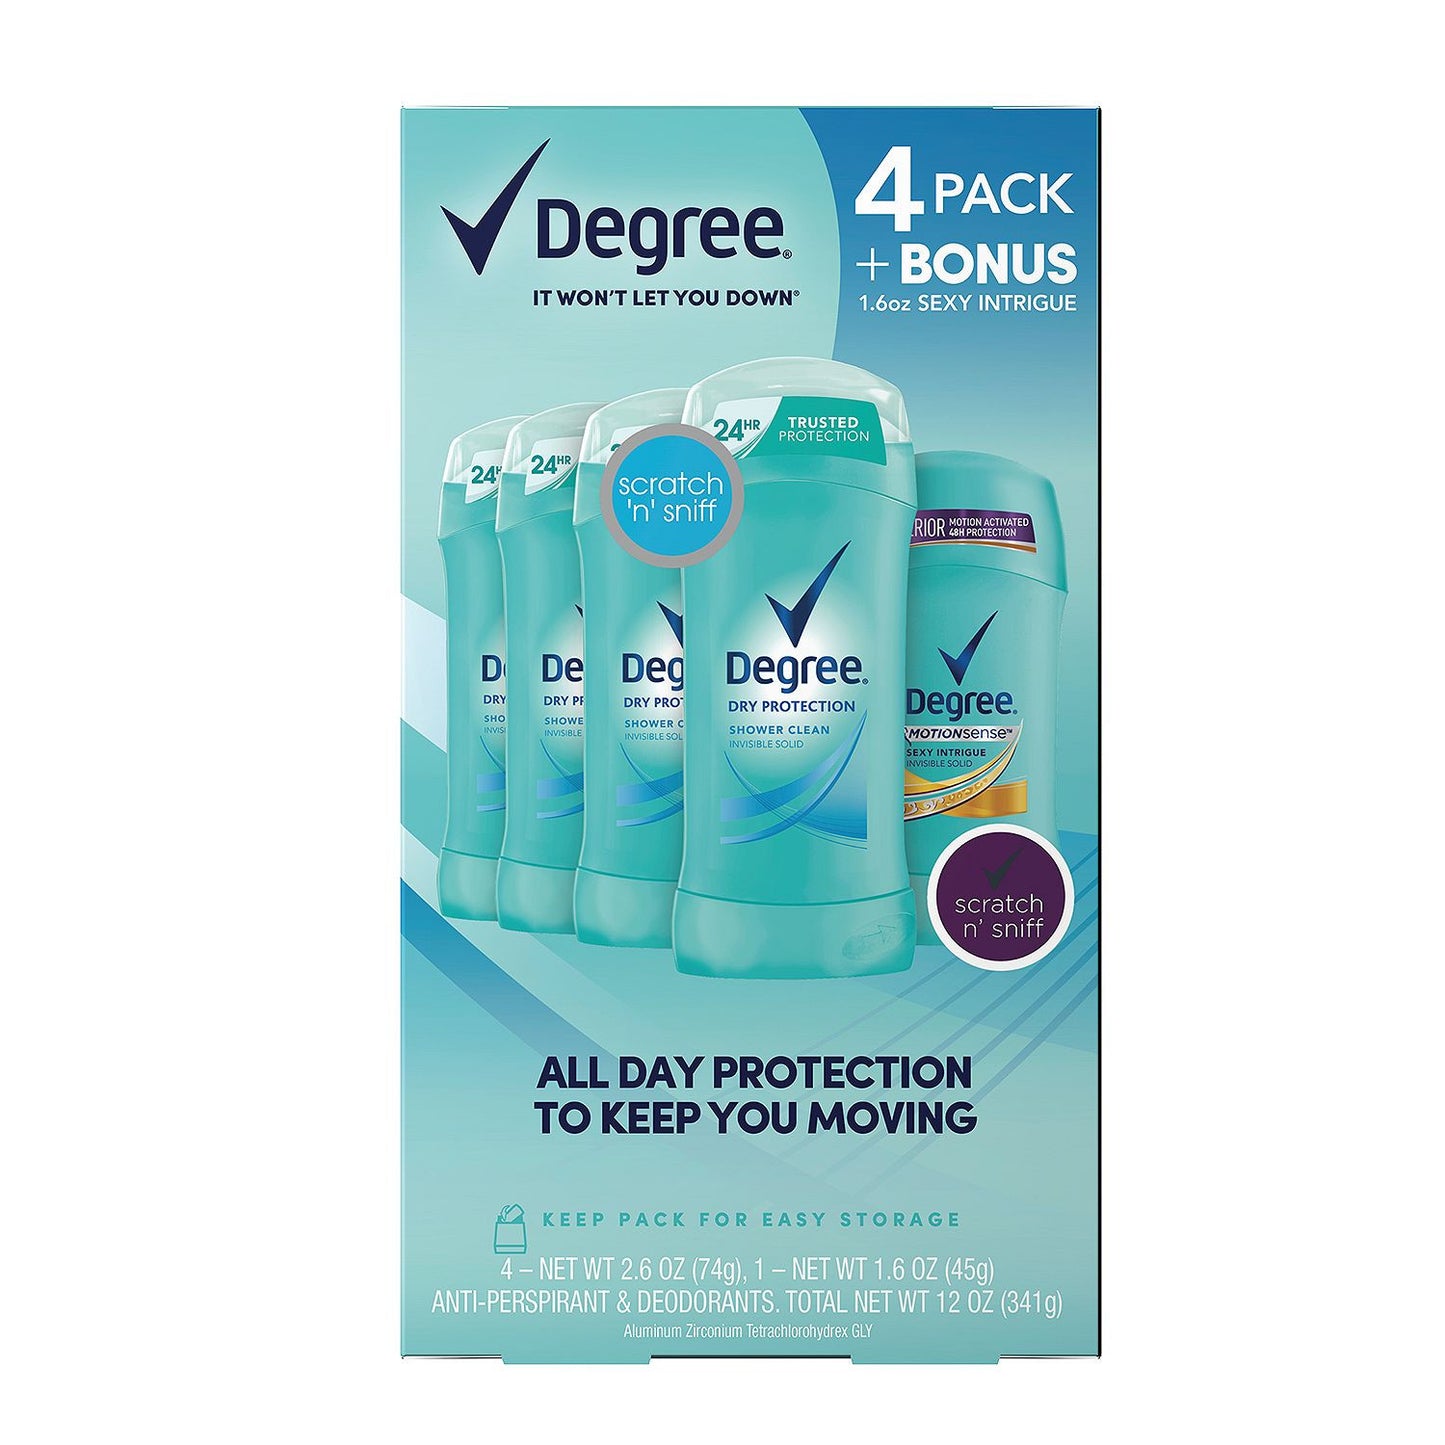 Degree Dry Protection Deodorant, Shower Clean (2.6 oz, 4 pk. + 1.6 oz.)